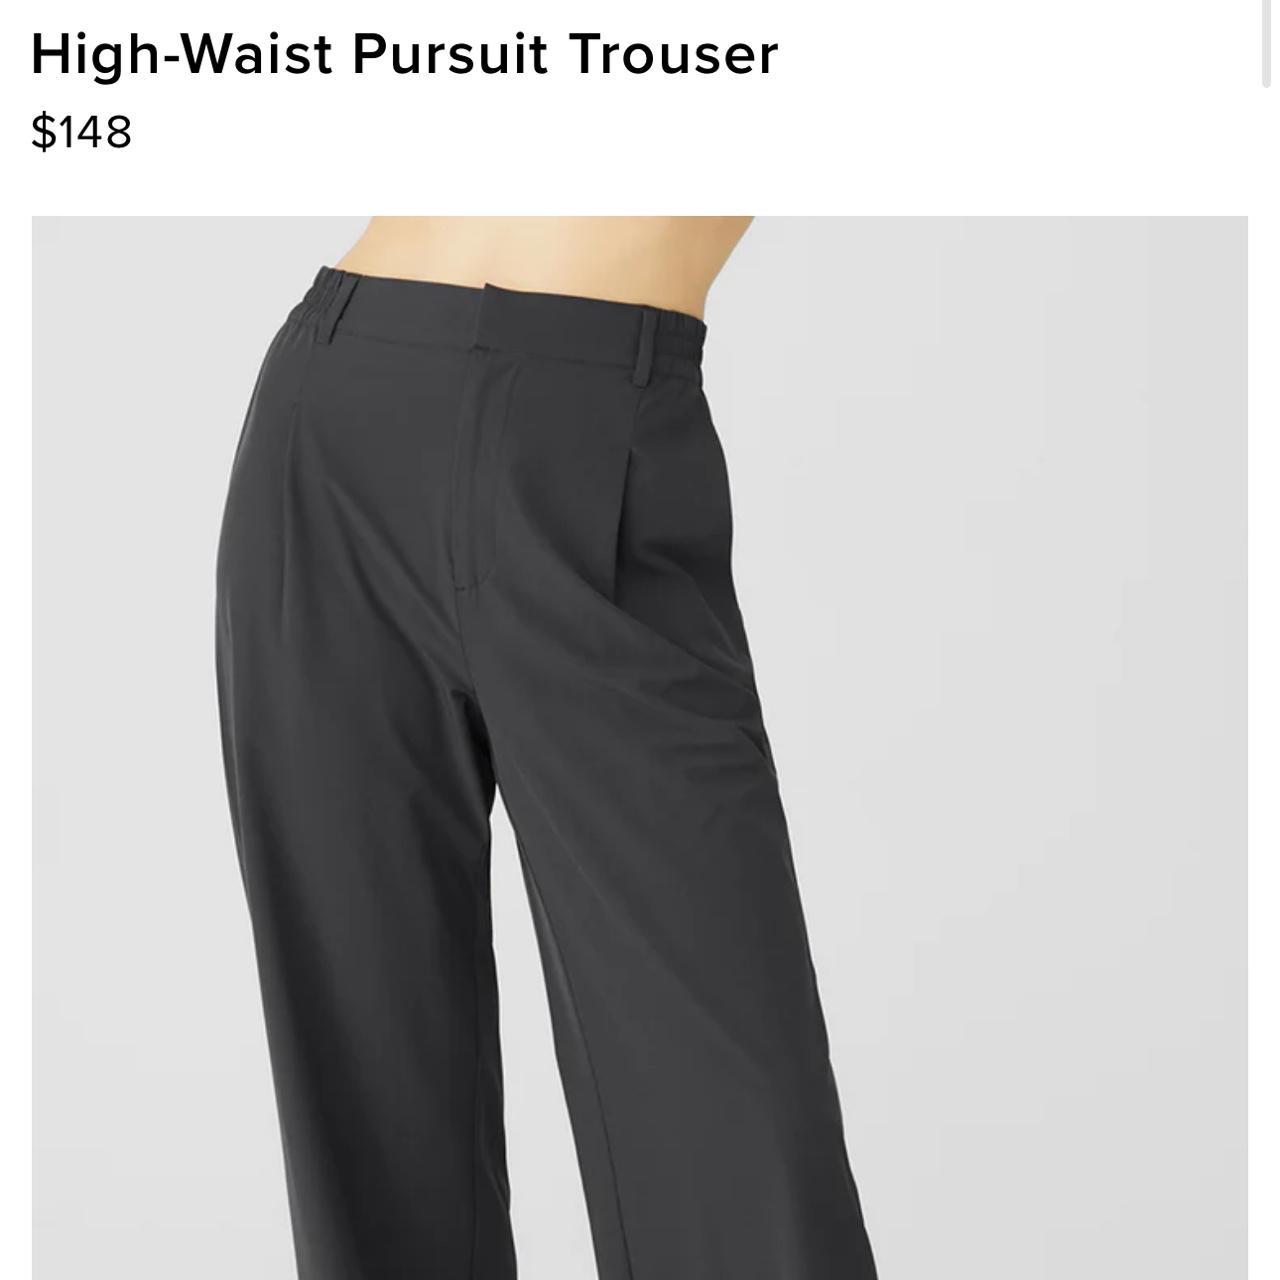 Alo yoga high waisted pursuit trouser gray - Depop